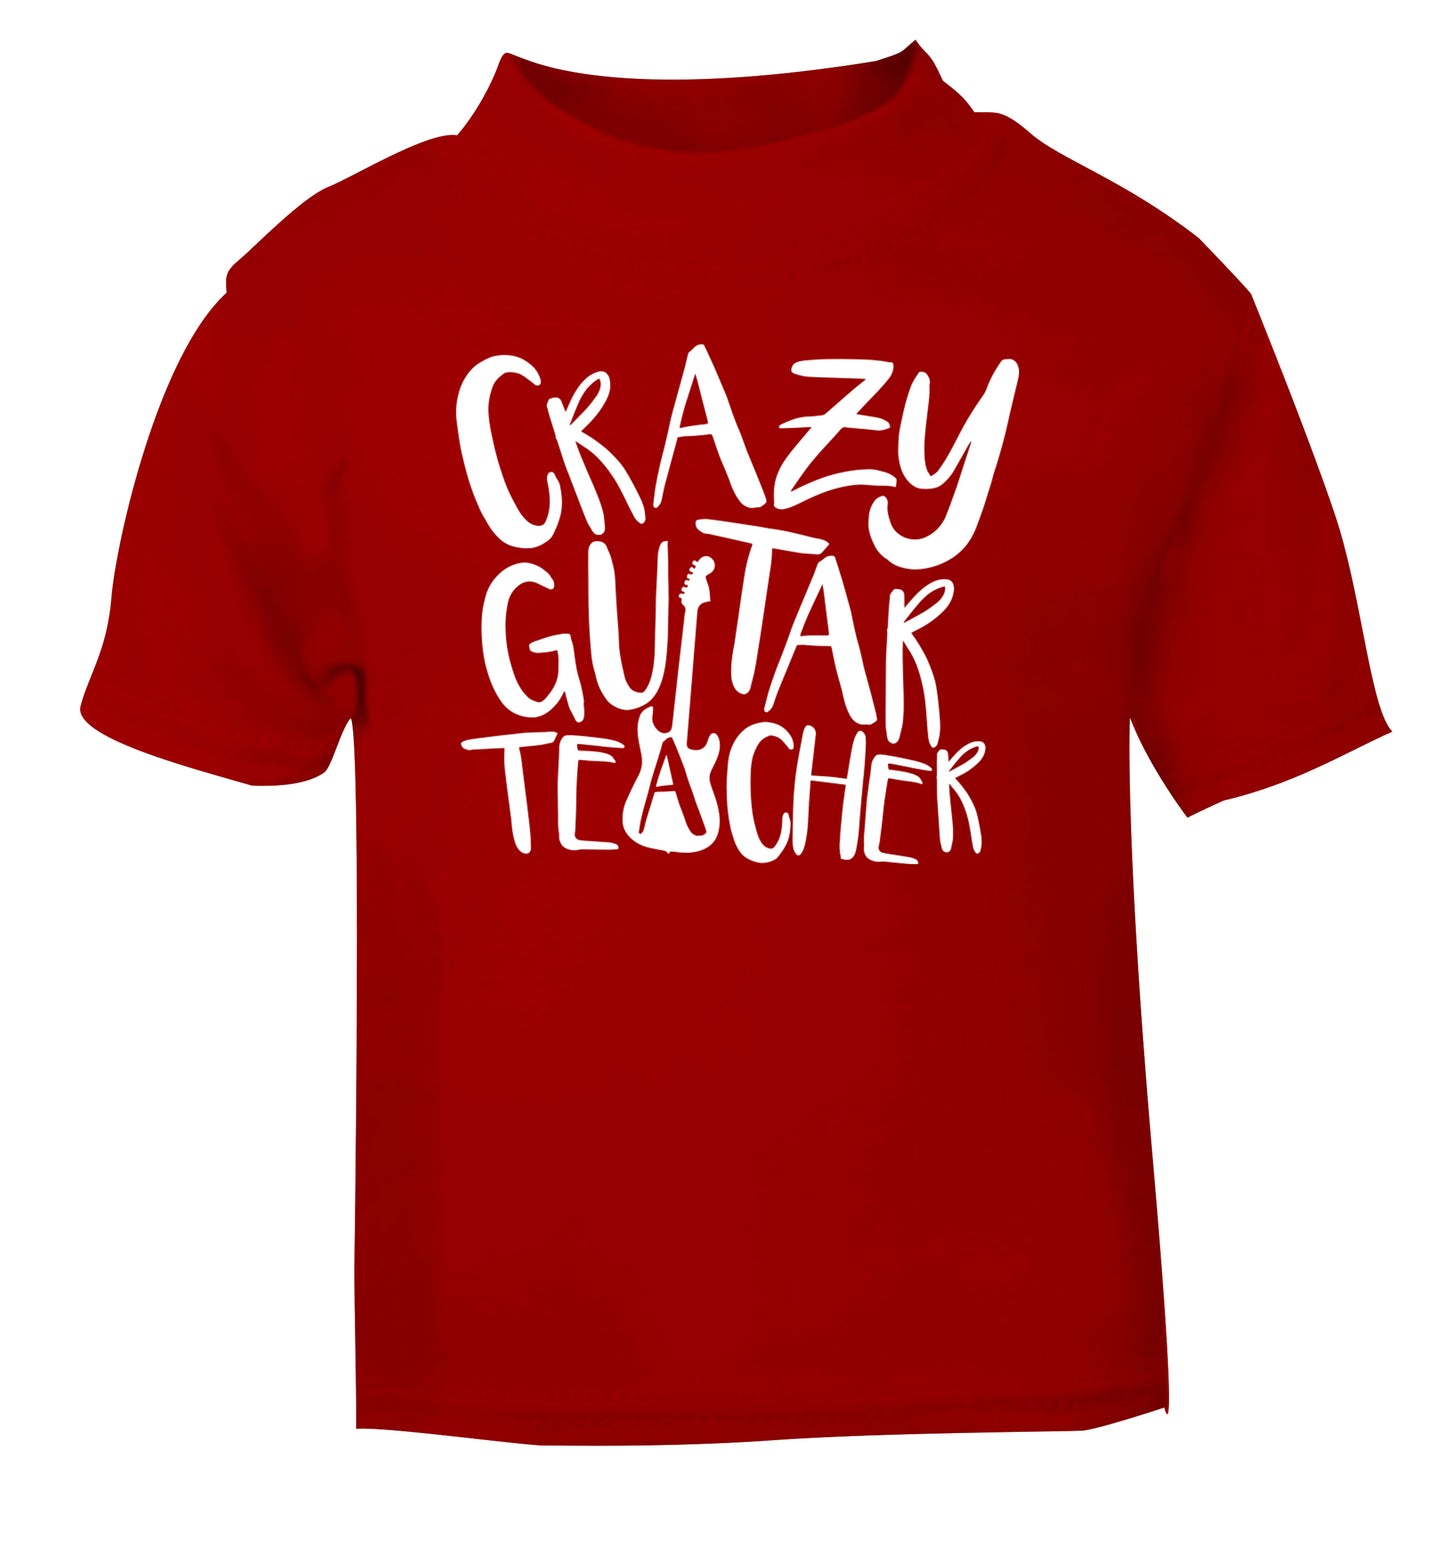 Crazy guitar teacher red Baby Toddler Tshirt 2 Years